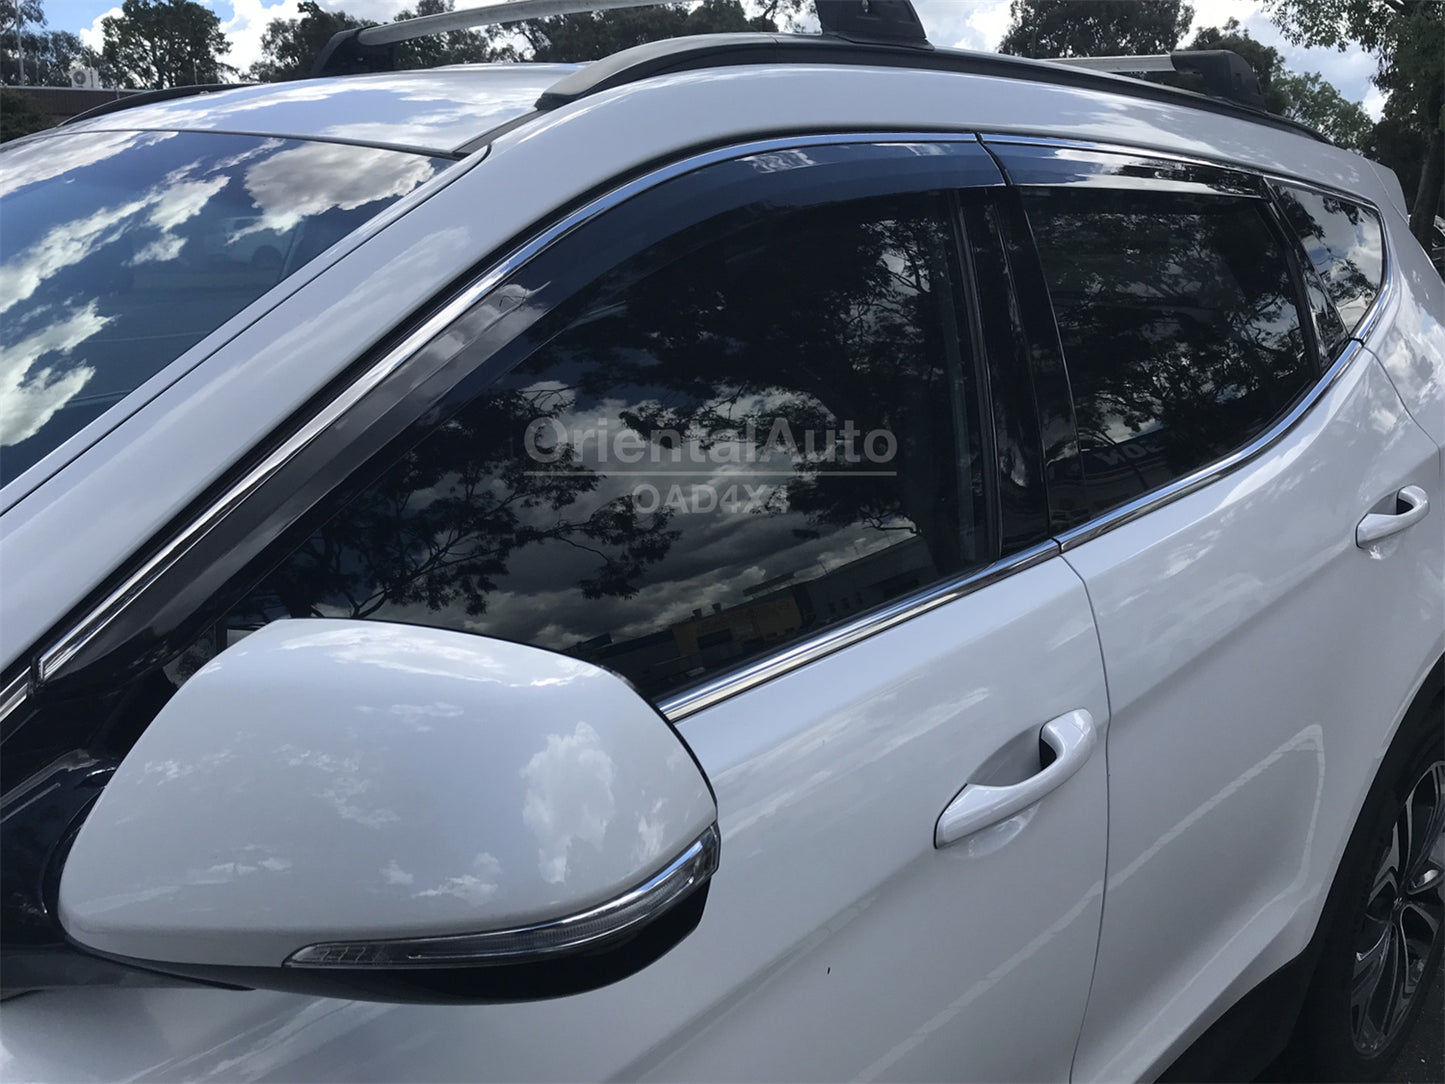 Injection Stainless Weathershields For Hyundai Santa Fe DM Series 2012-2018 Weather Shields Window Visors